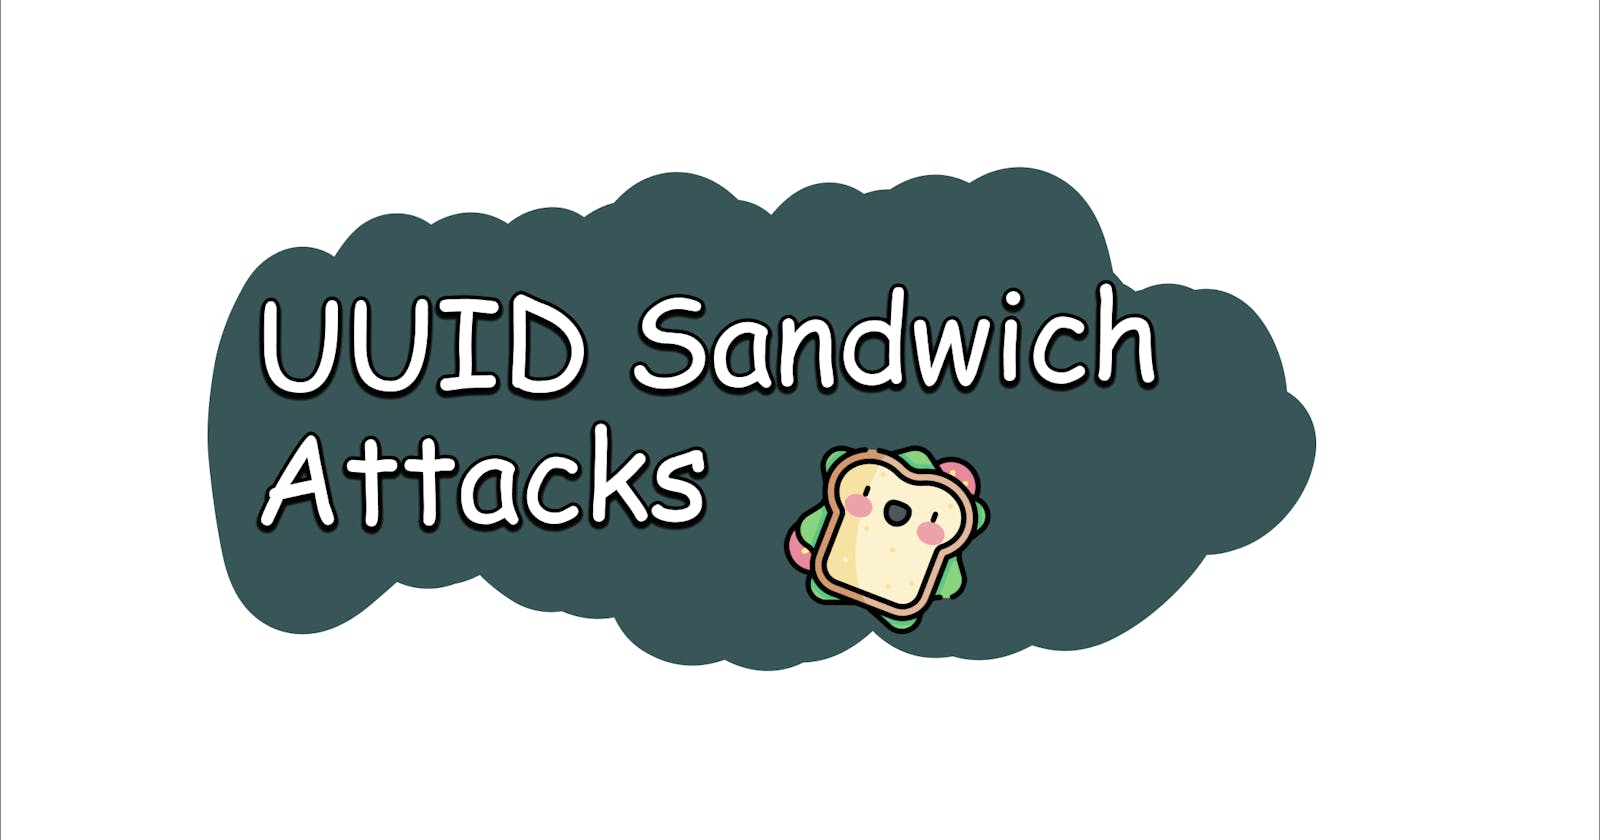 UUID Sandwich Attacks